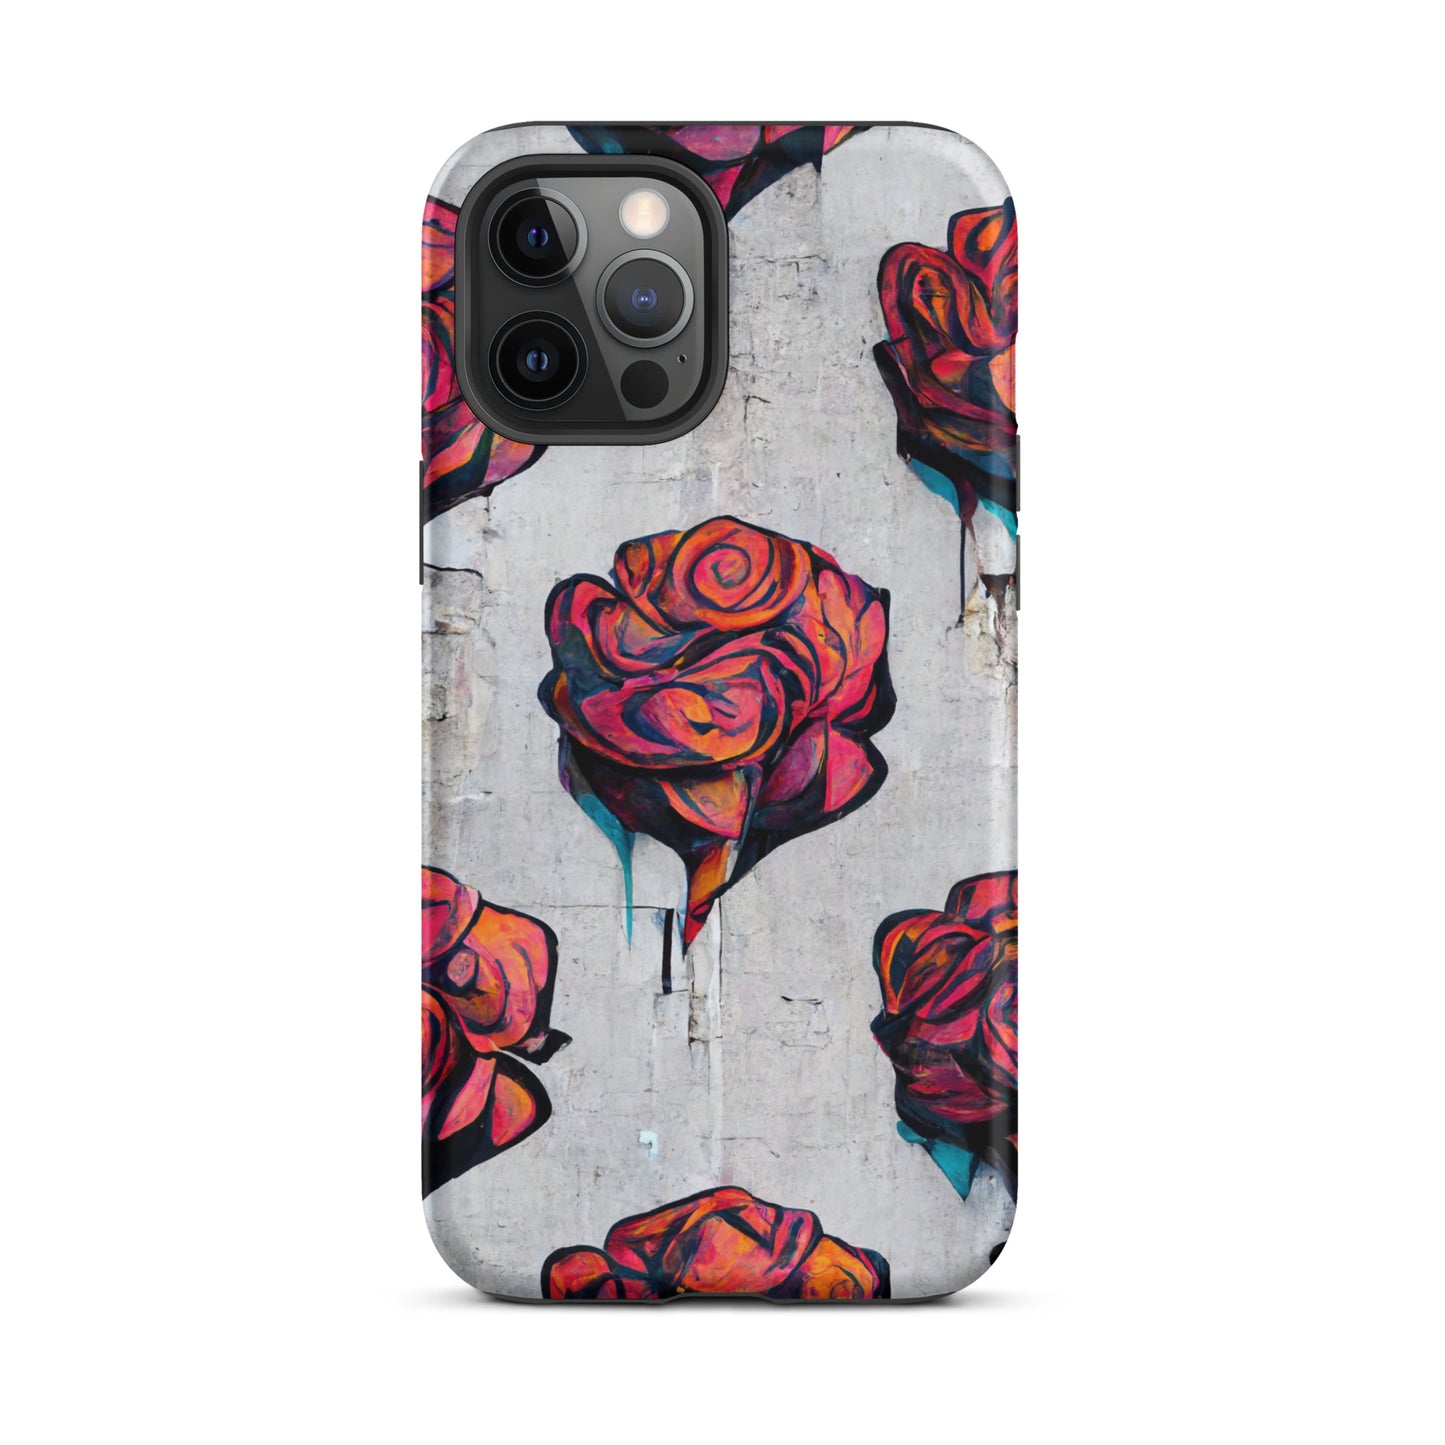 Neduz Designs Artified Graffiti Roses Tough Case for iPhone®